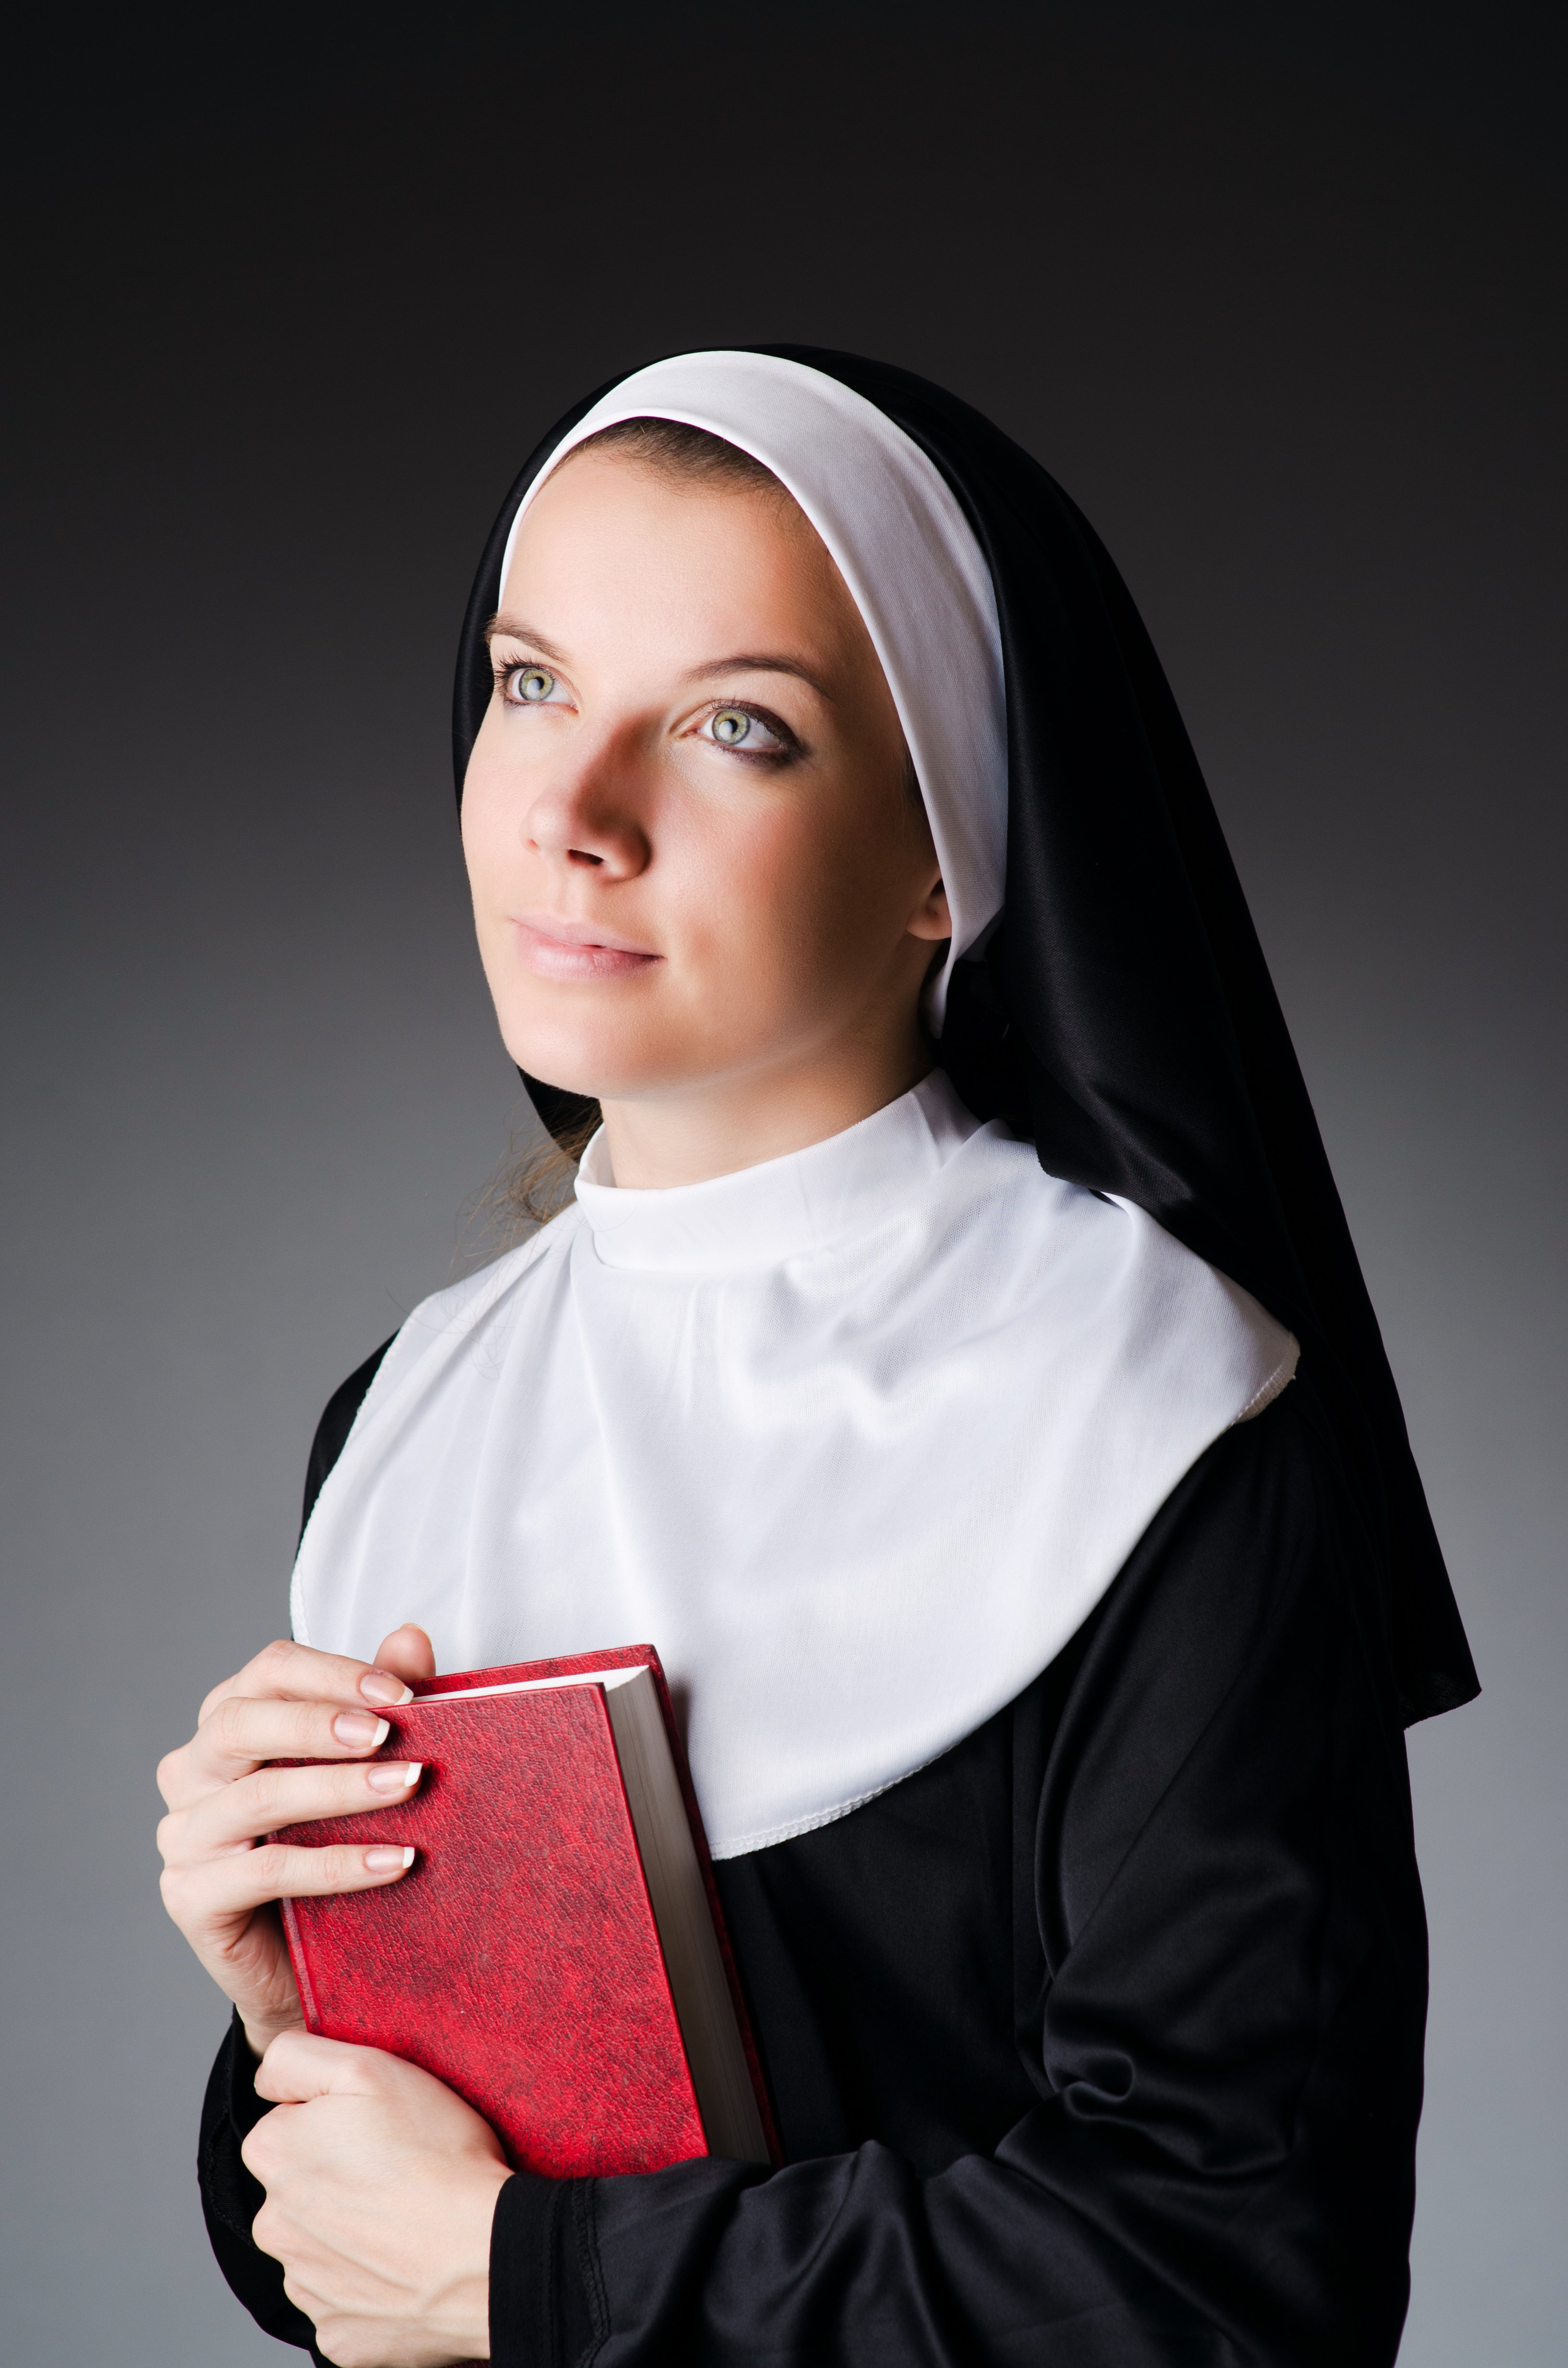 Nonne | Quelle: Shutterstock